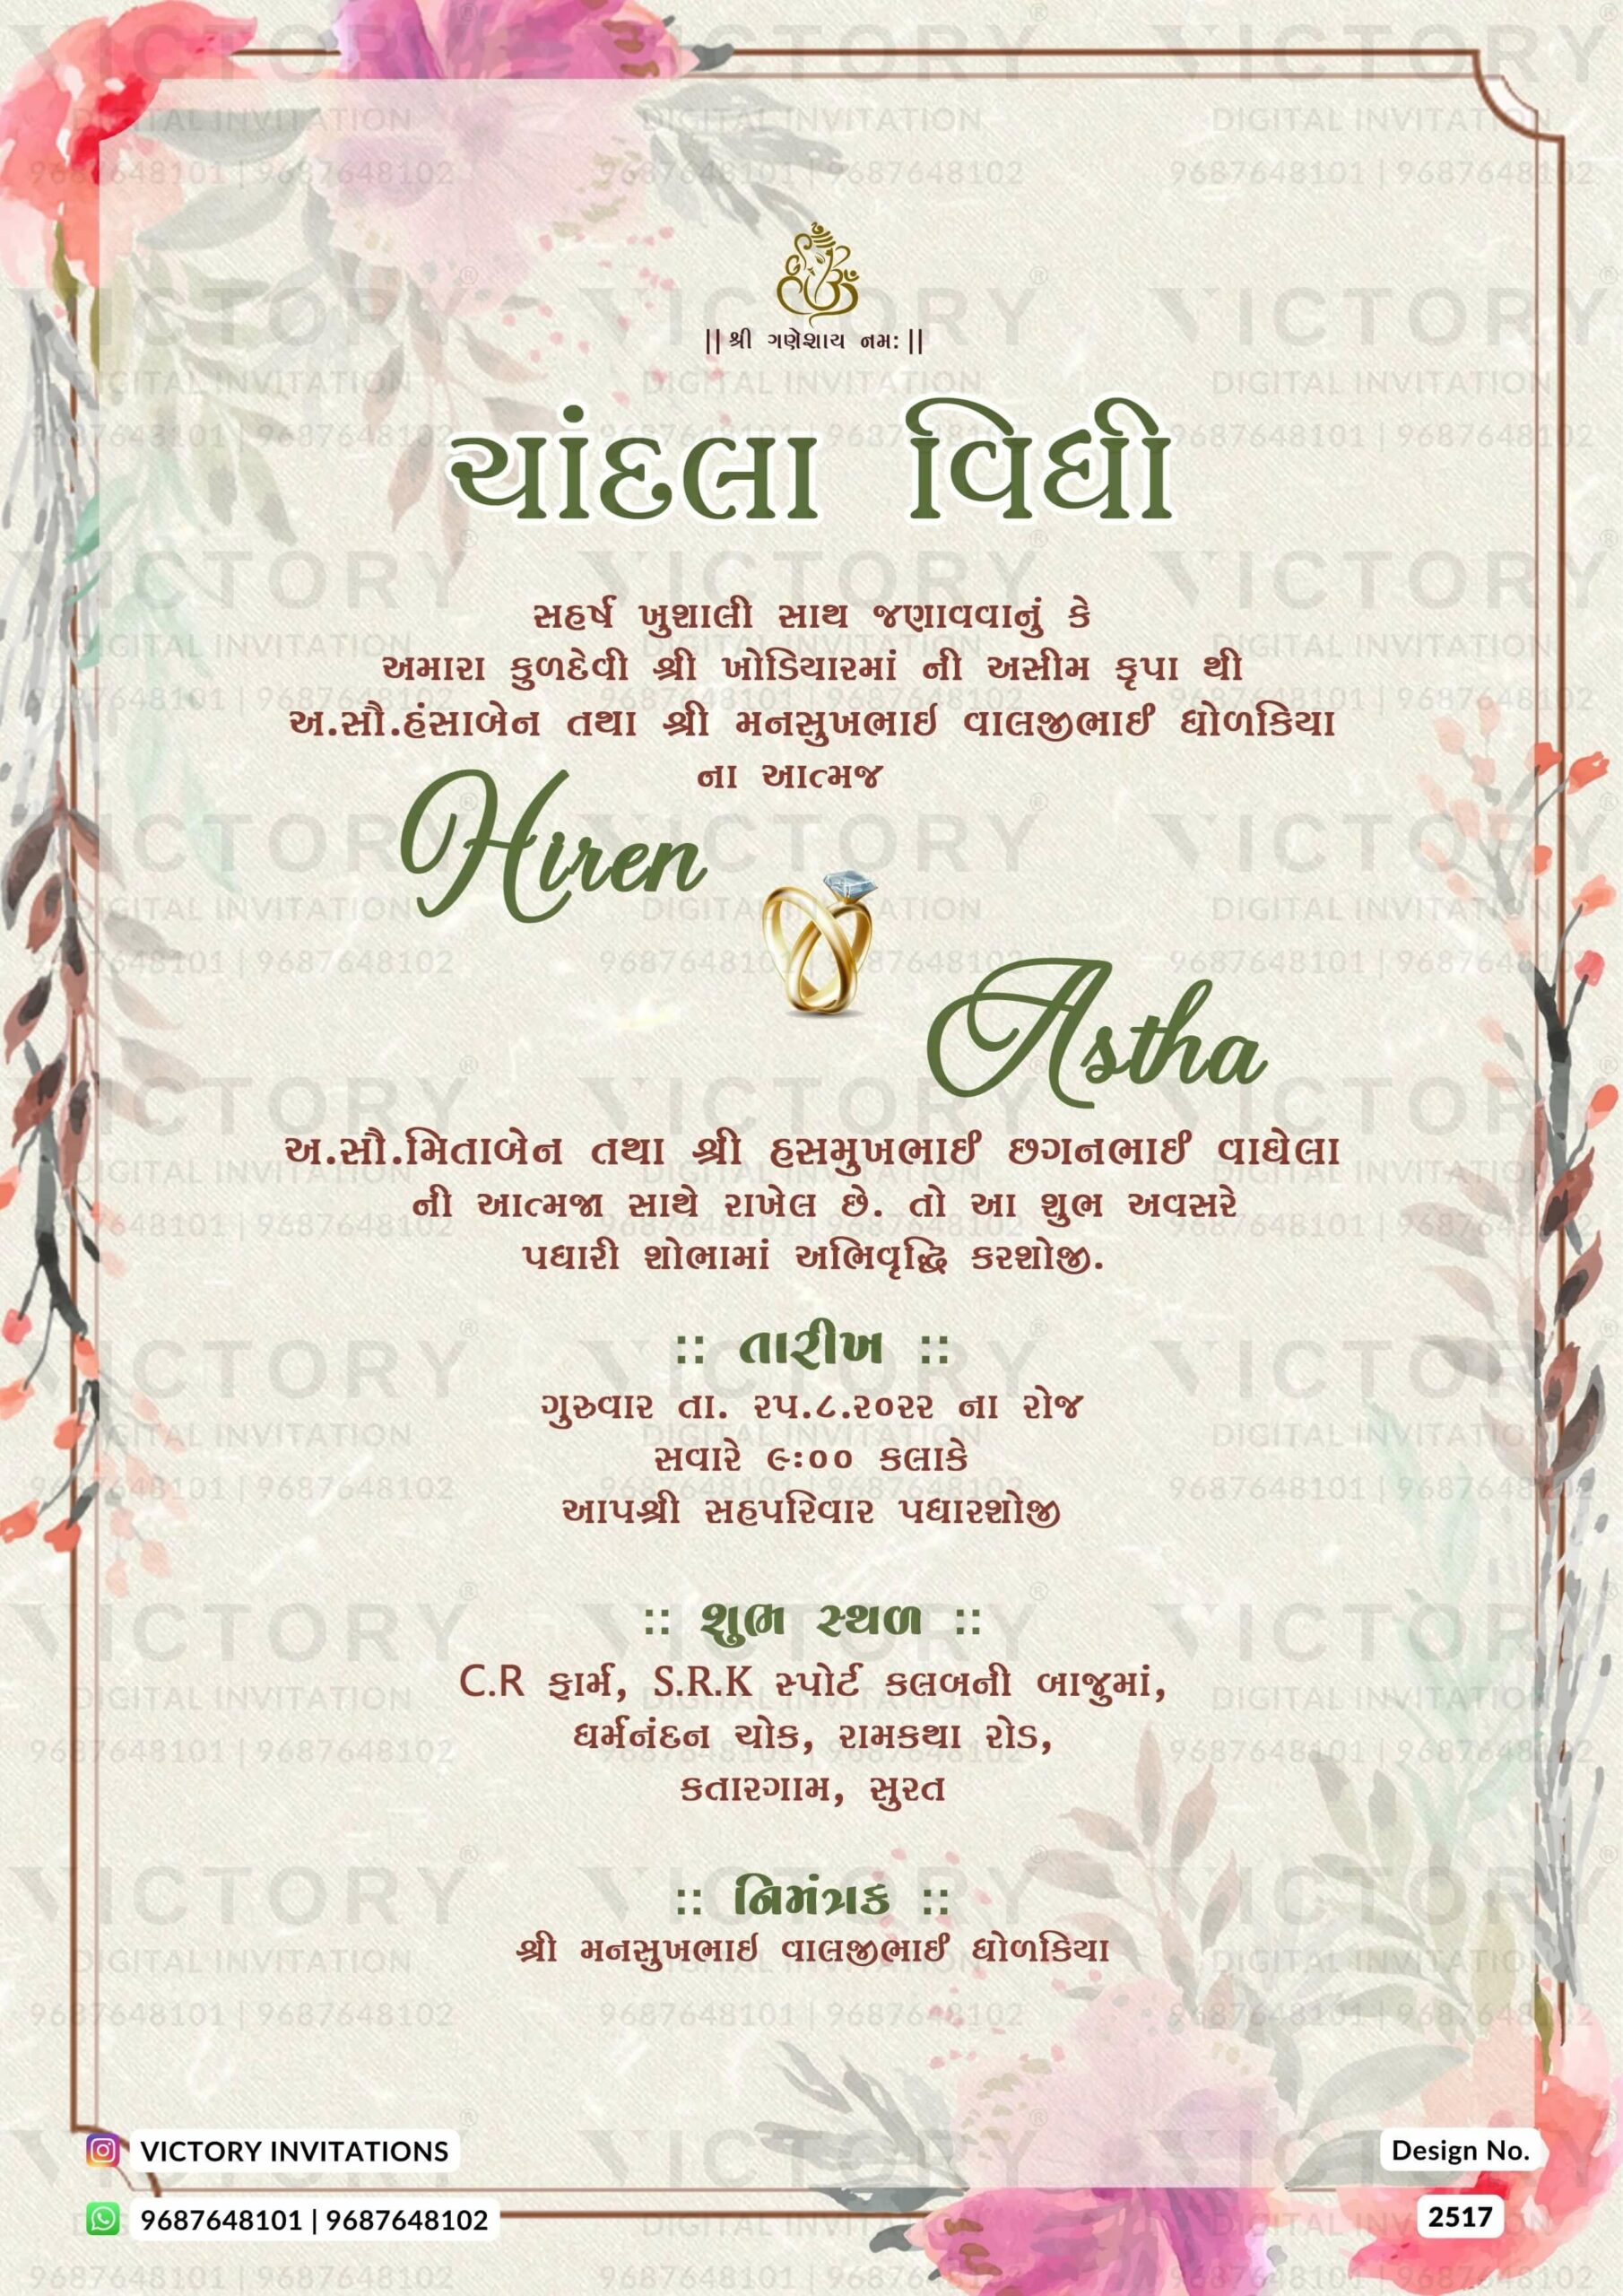 floral theme off white color engagement invitation digital card in Gujarati language design 2517